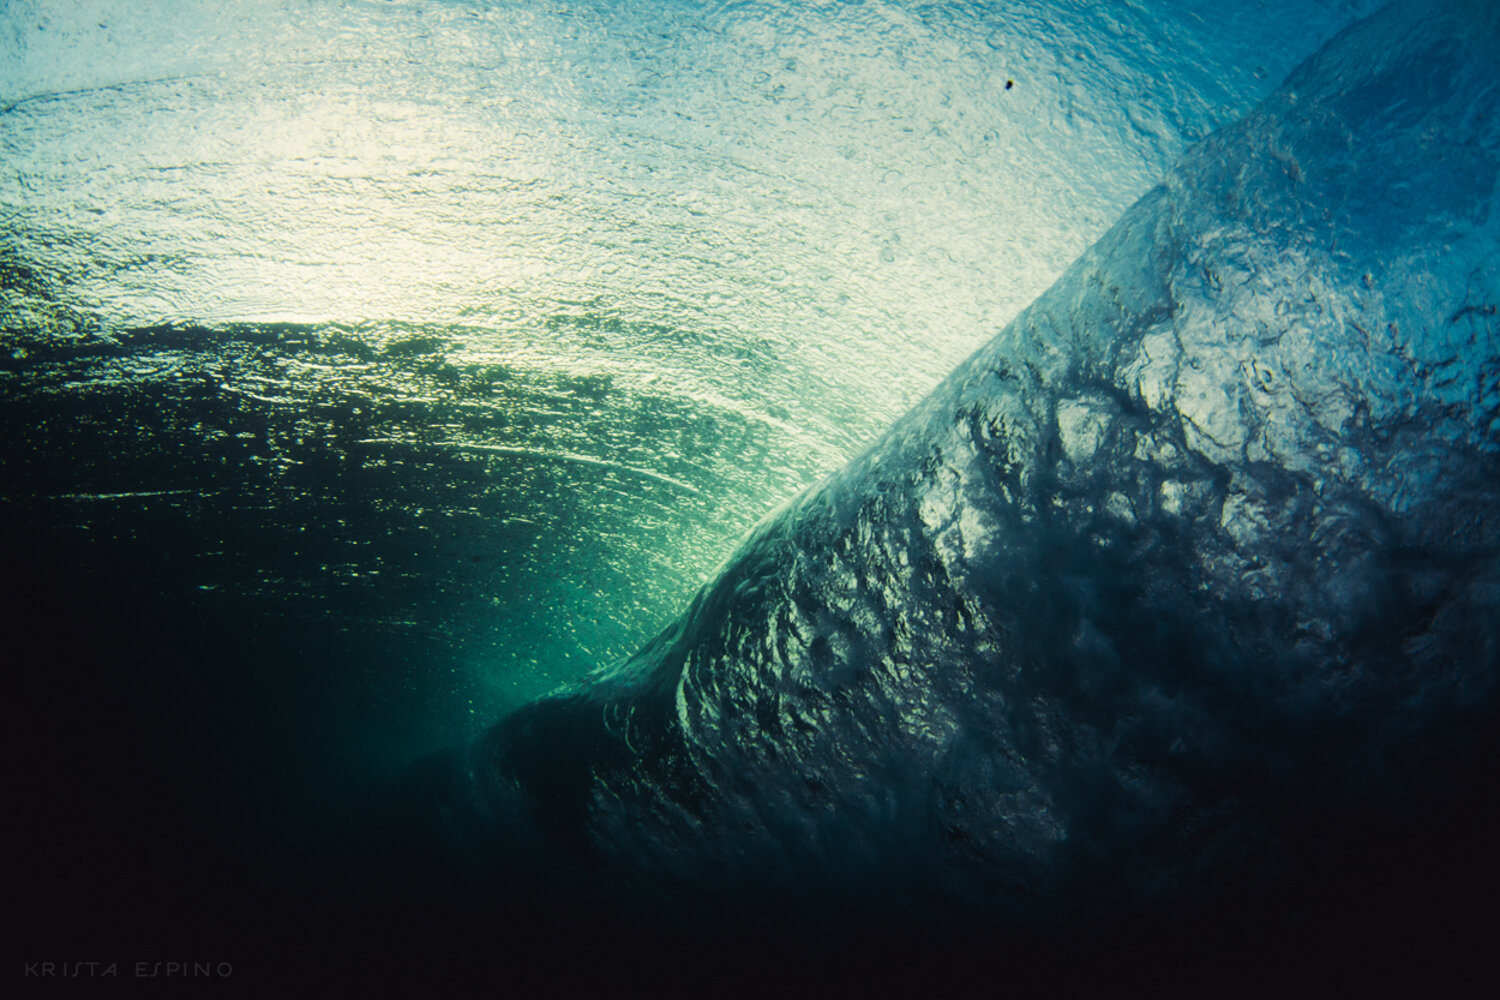 bodysurf waves lifestyle nature photography photographer krista espino travel underwater swim ocean laguna beach_-2.jpg